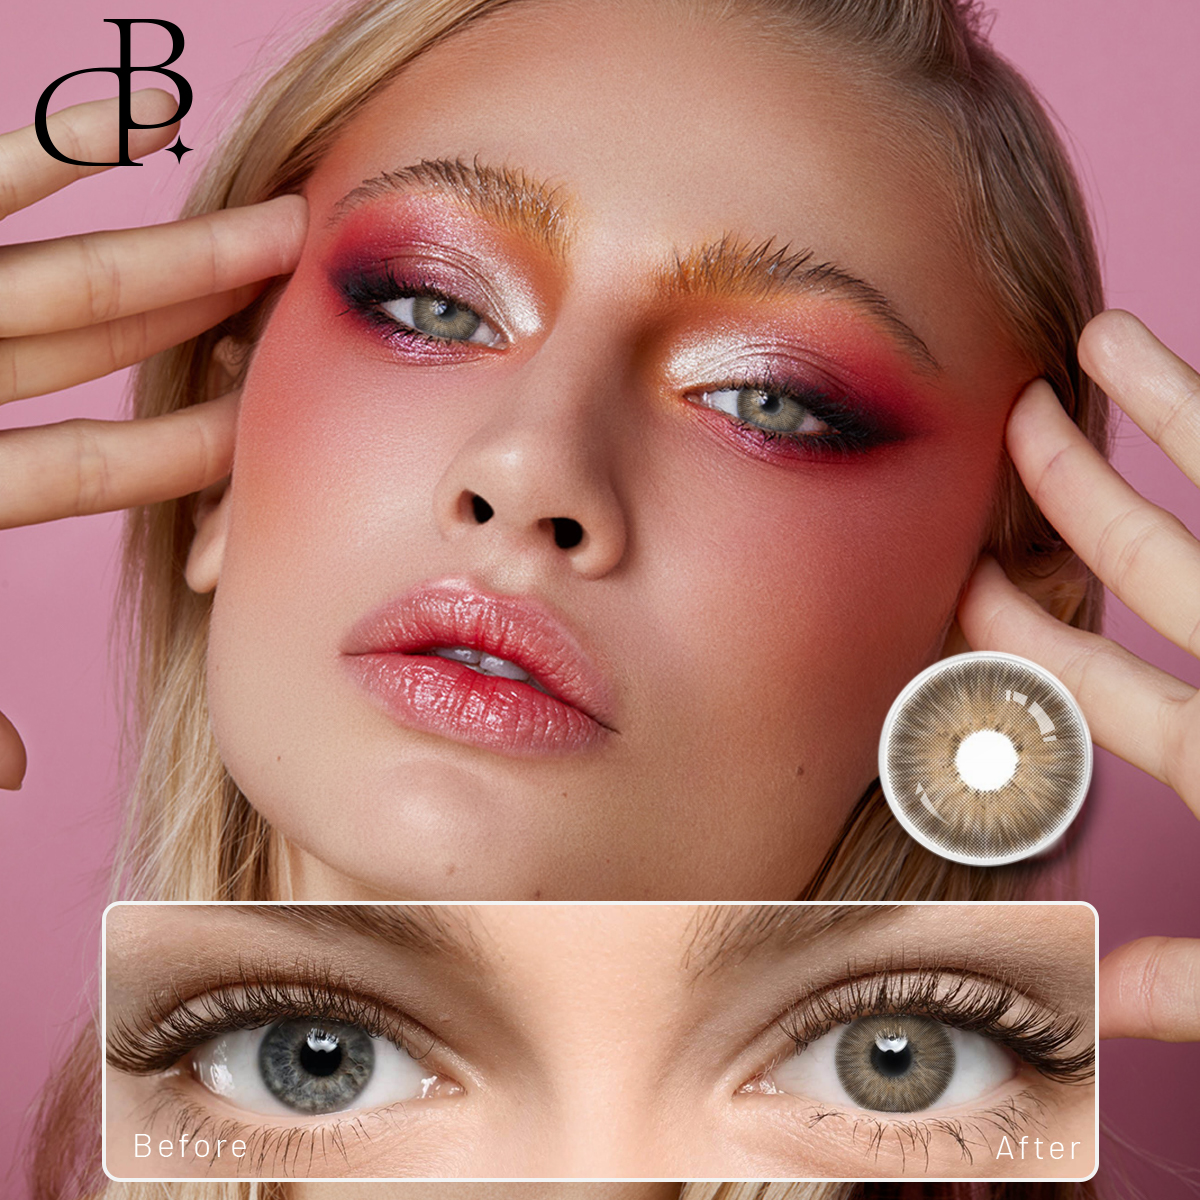 Dbeyes 2023 lentes marrons Olhos Naturais Lentes Coloridas Cosplay Lentes de Olhos Cosméticas Lentes de Contatos Coloridas